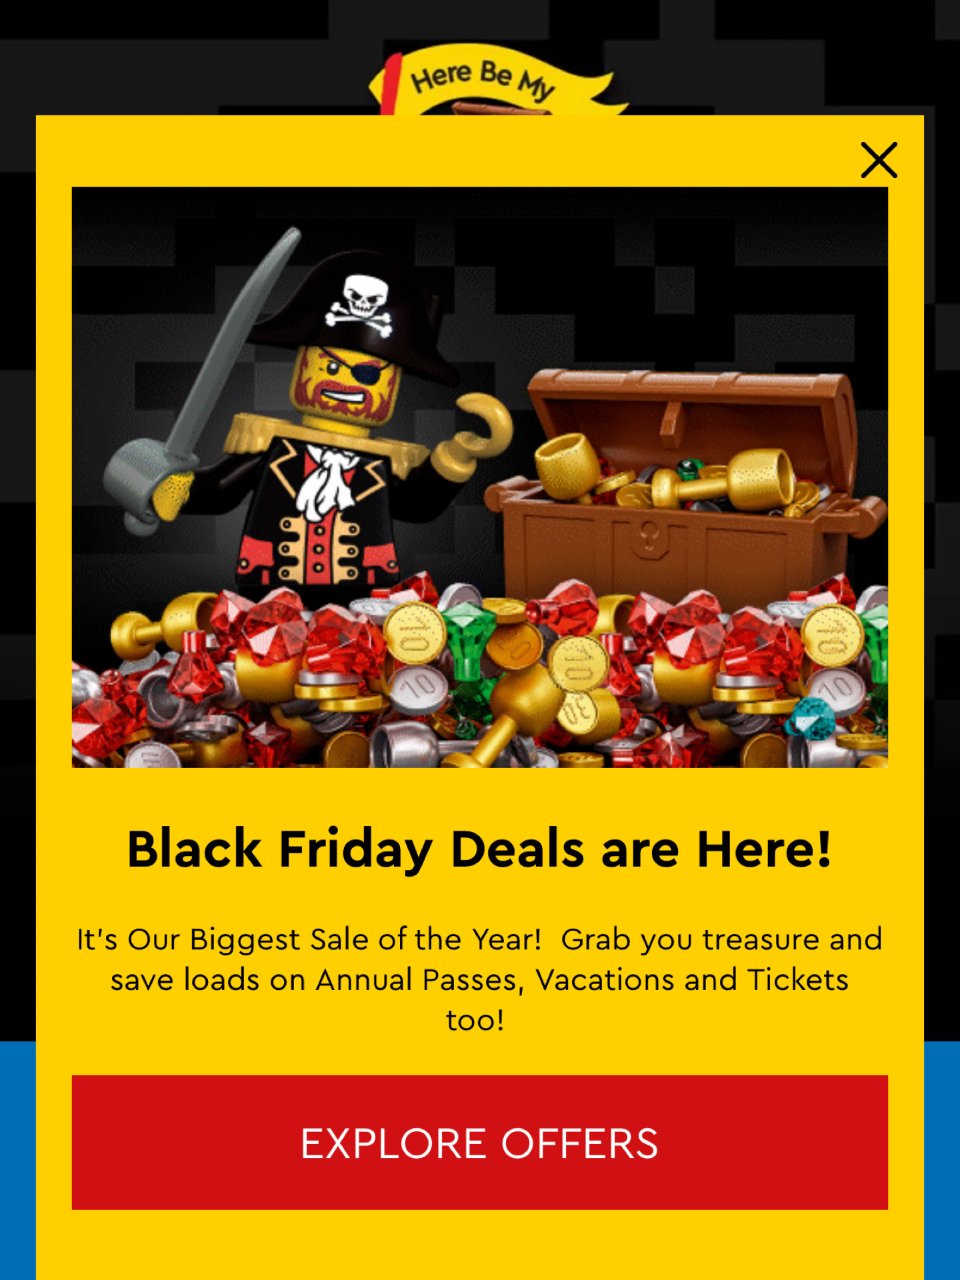 Legoland黑五门票优惠🤩...